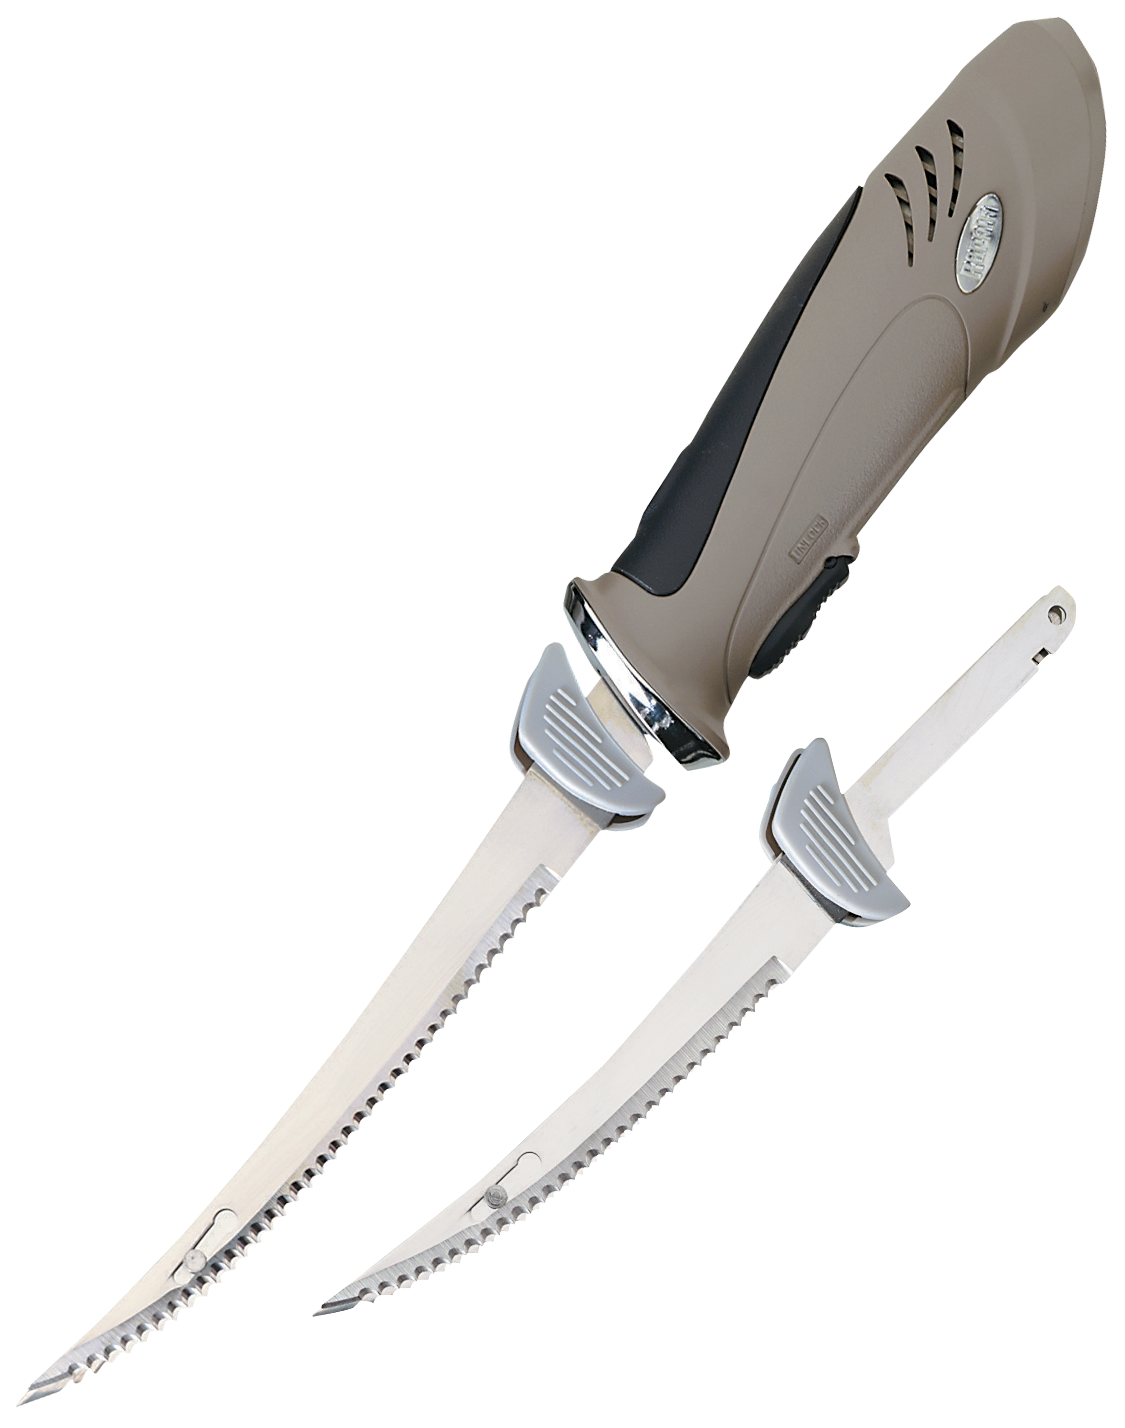 Bubba Blade 110v Electric Corded Fillet Knife - Marine General